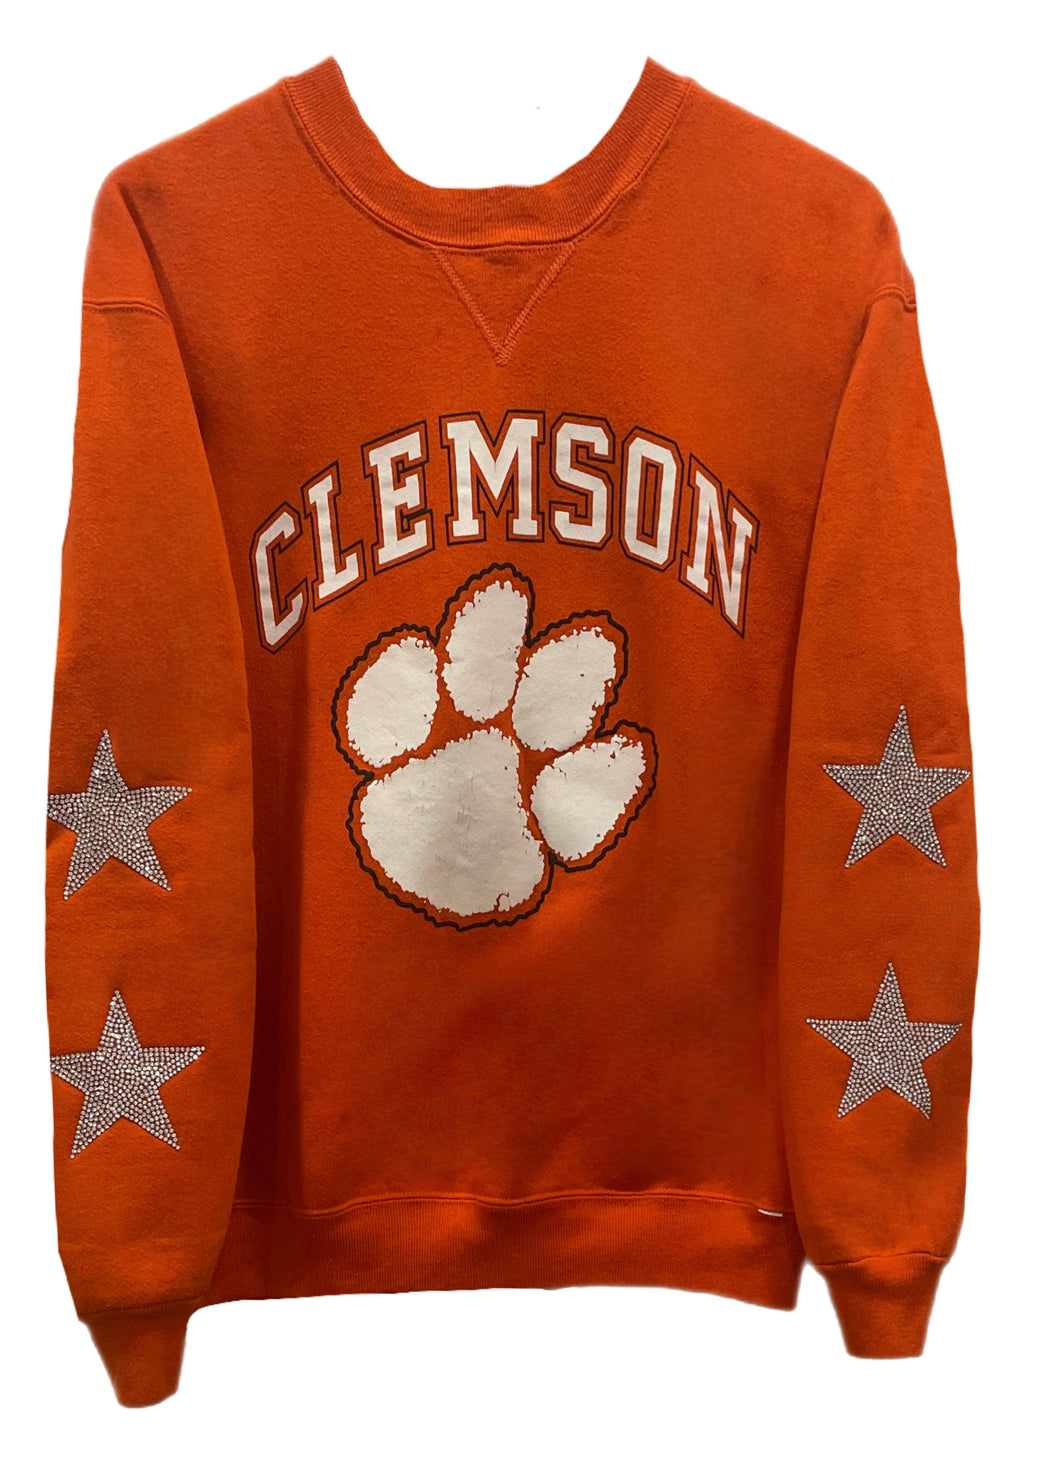 Clemson University, One of a KIND Vintage Sweatshirt with Crystal Star Design